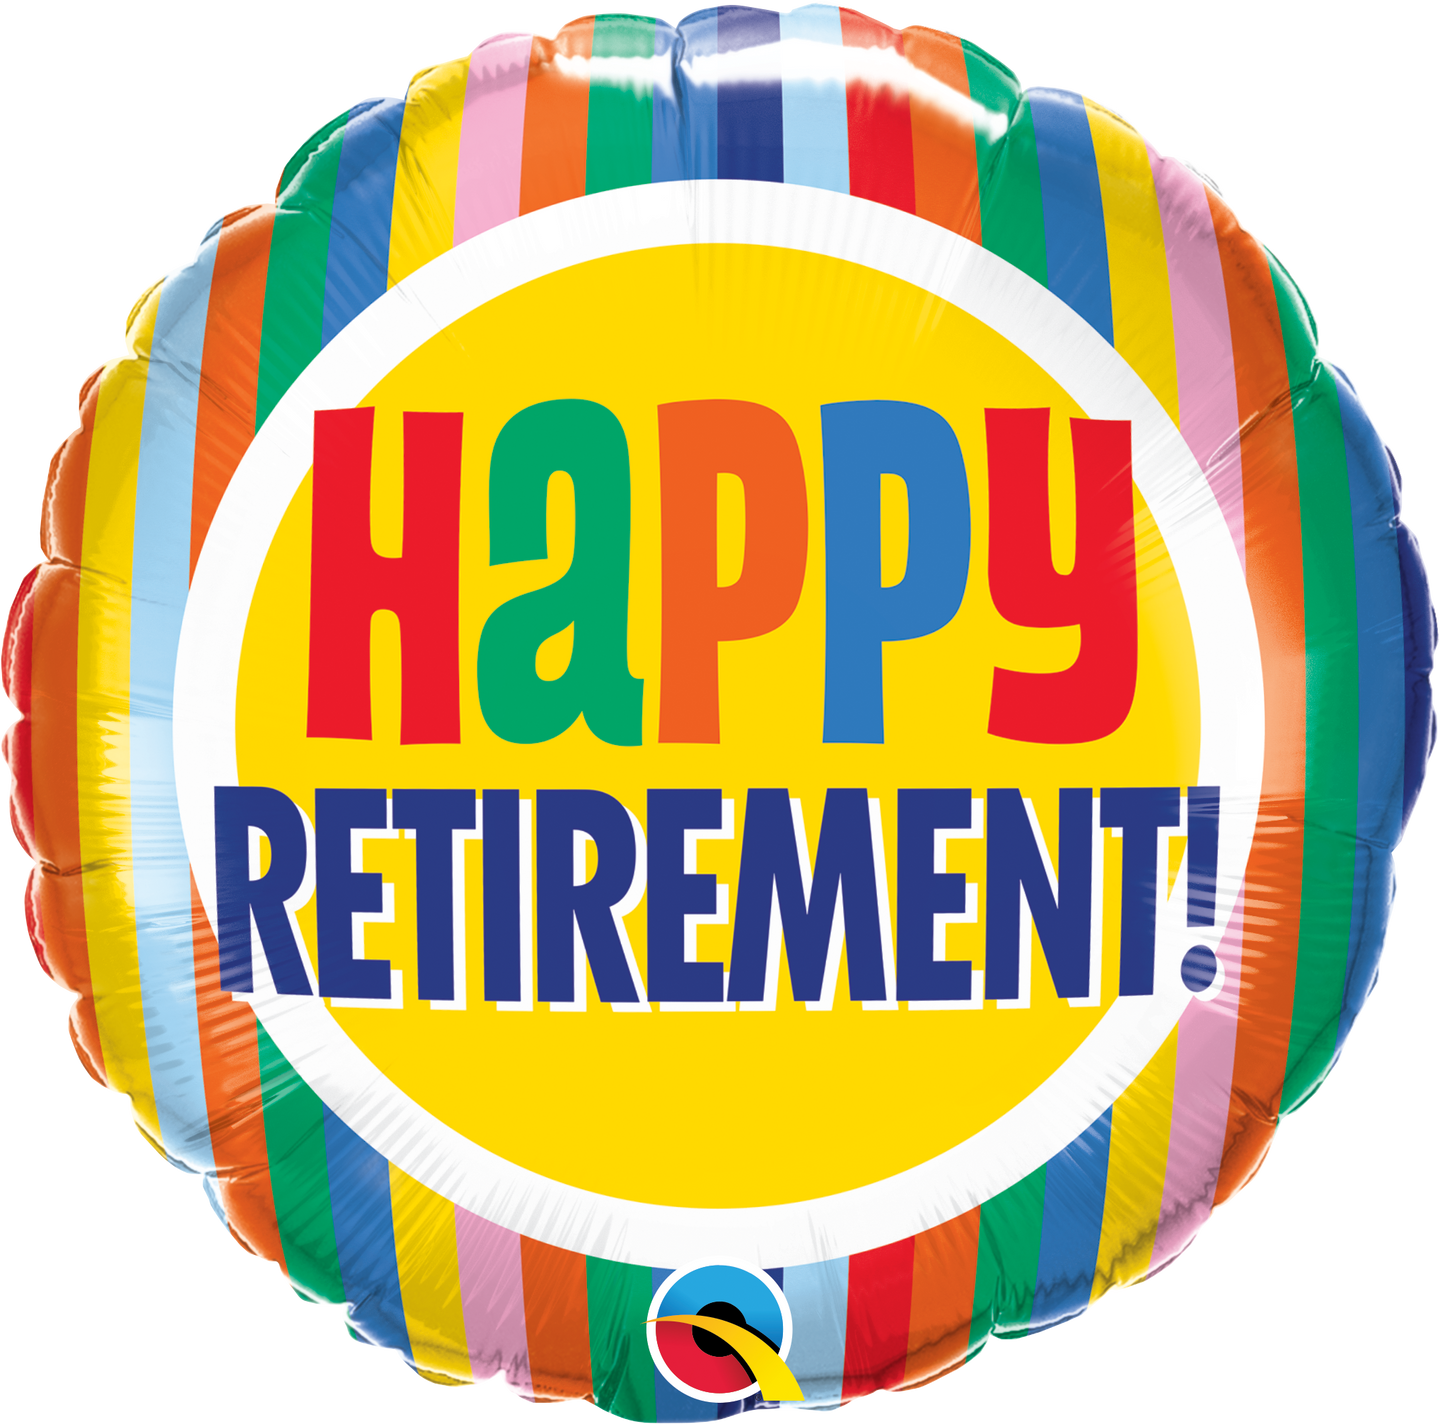 Retirement Colourful Stripes Balloon